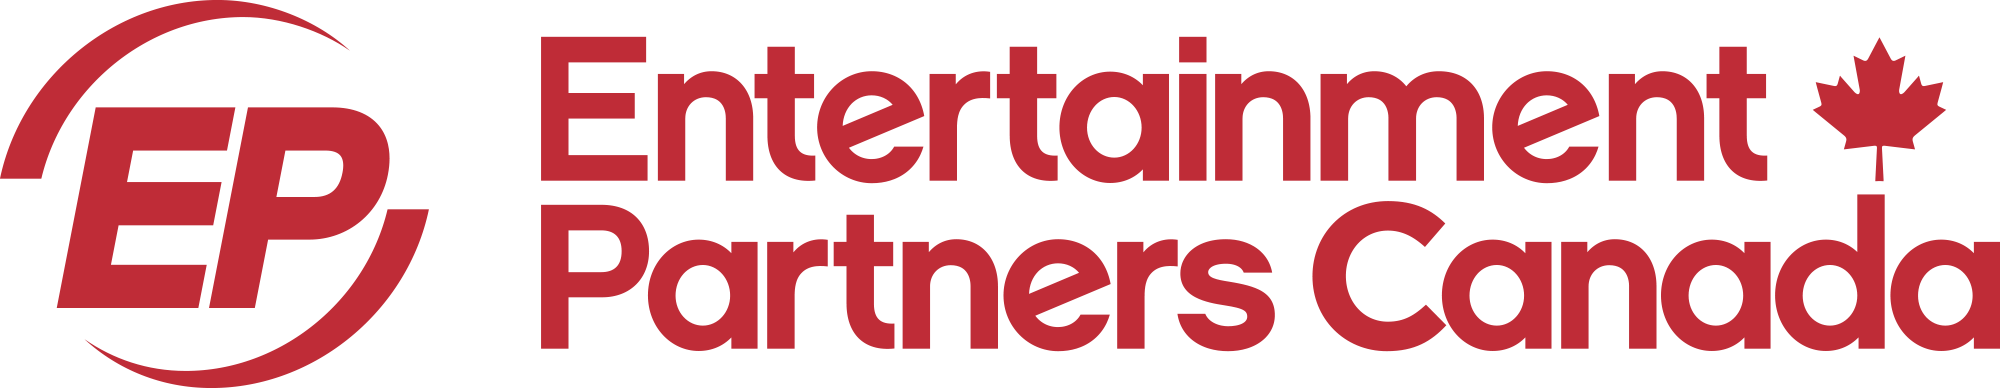 Entertainment Partners Logo - Entertainment Partners Canada 2016 Transparent - Big Brothers Big ...